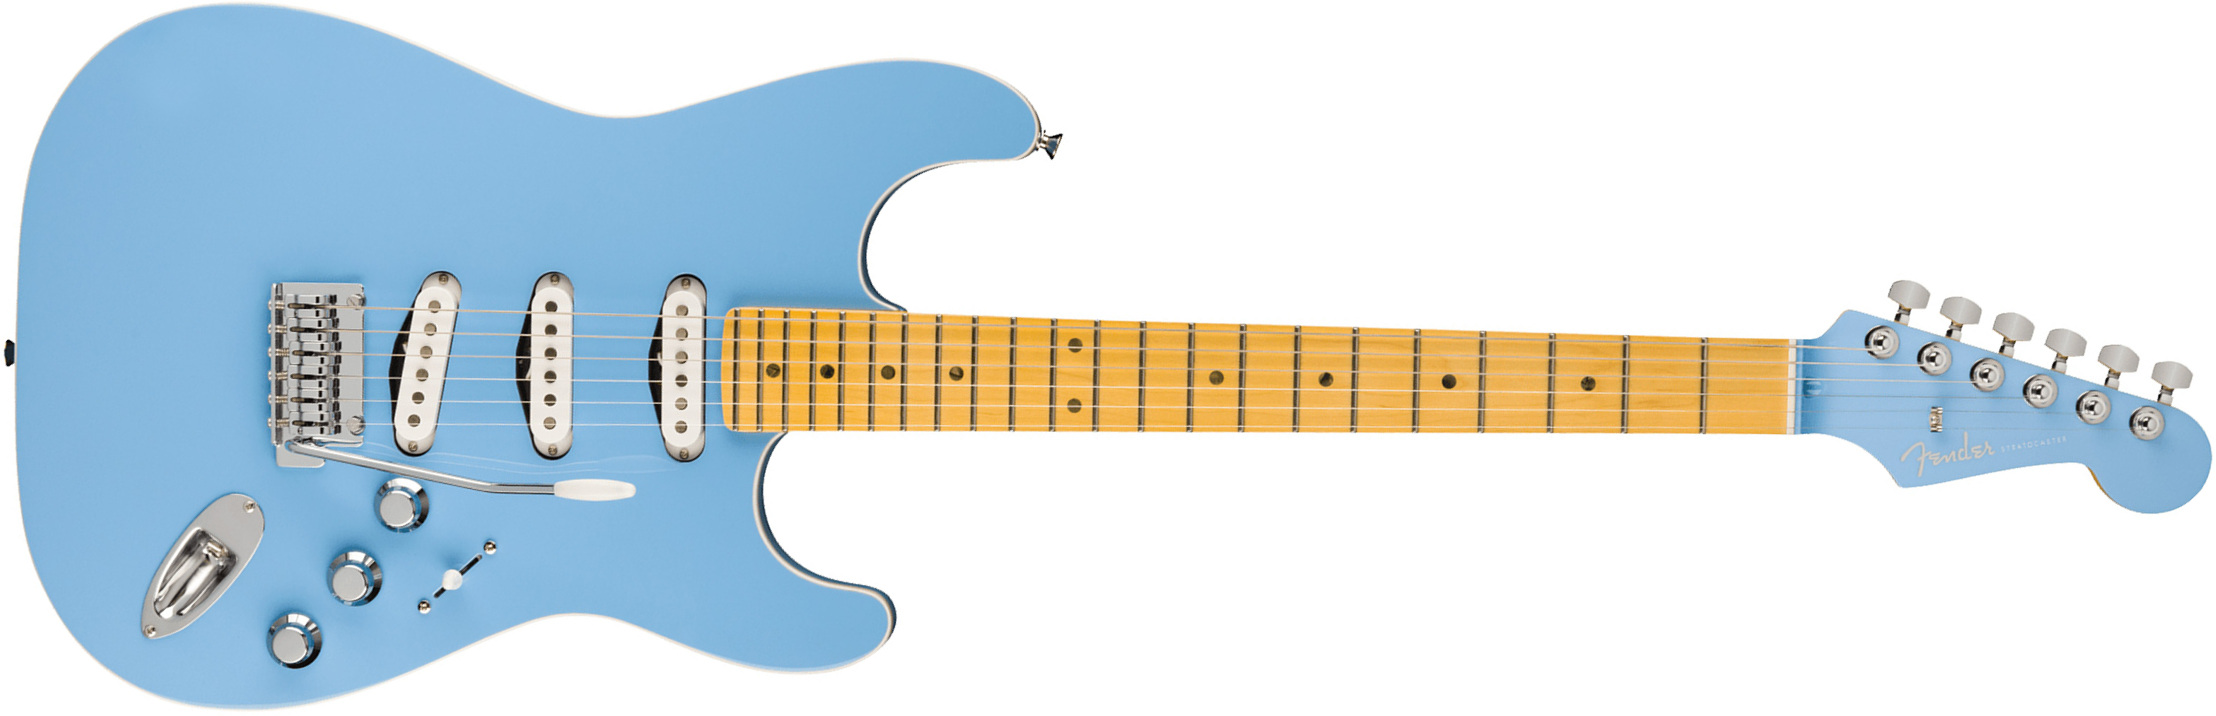 Fender Strat Aerodyne Special Jap 3s Trem Mn - California Blue - Str shape electric guitar - Main picture